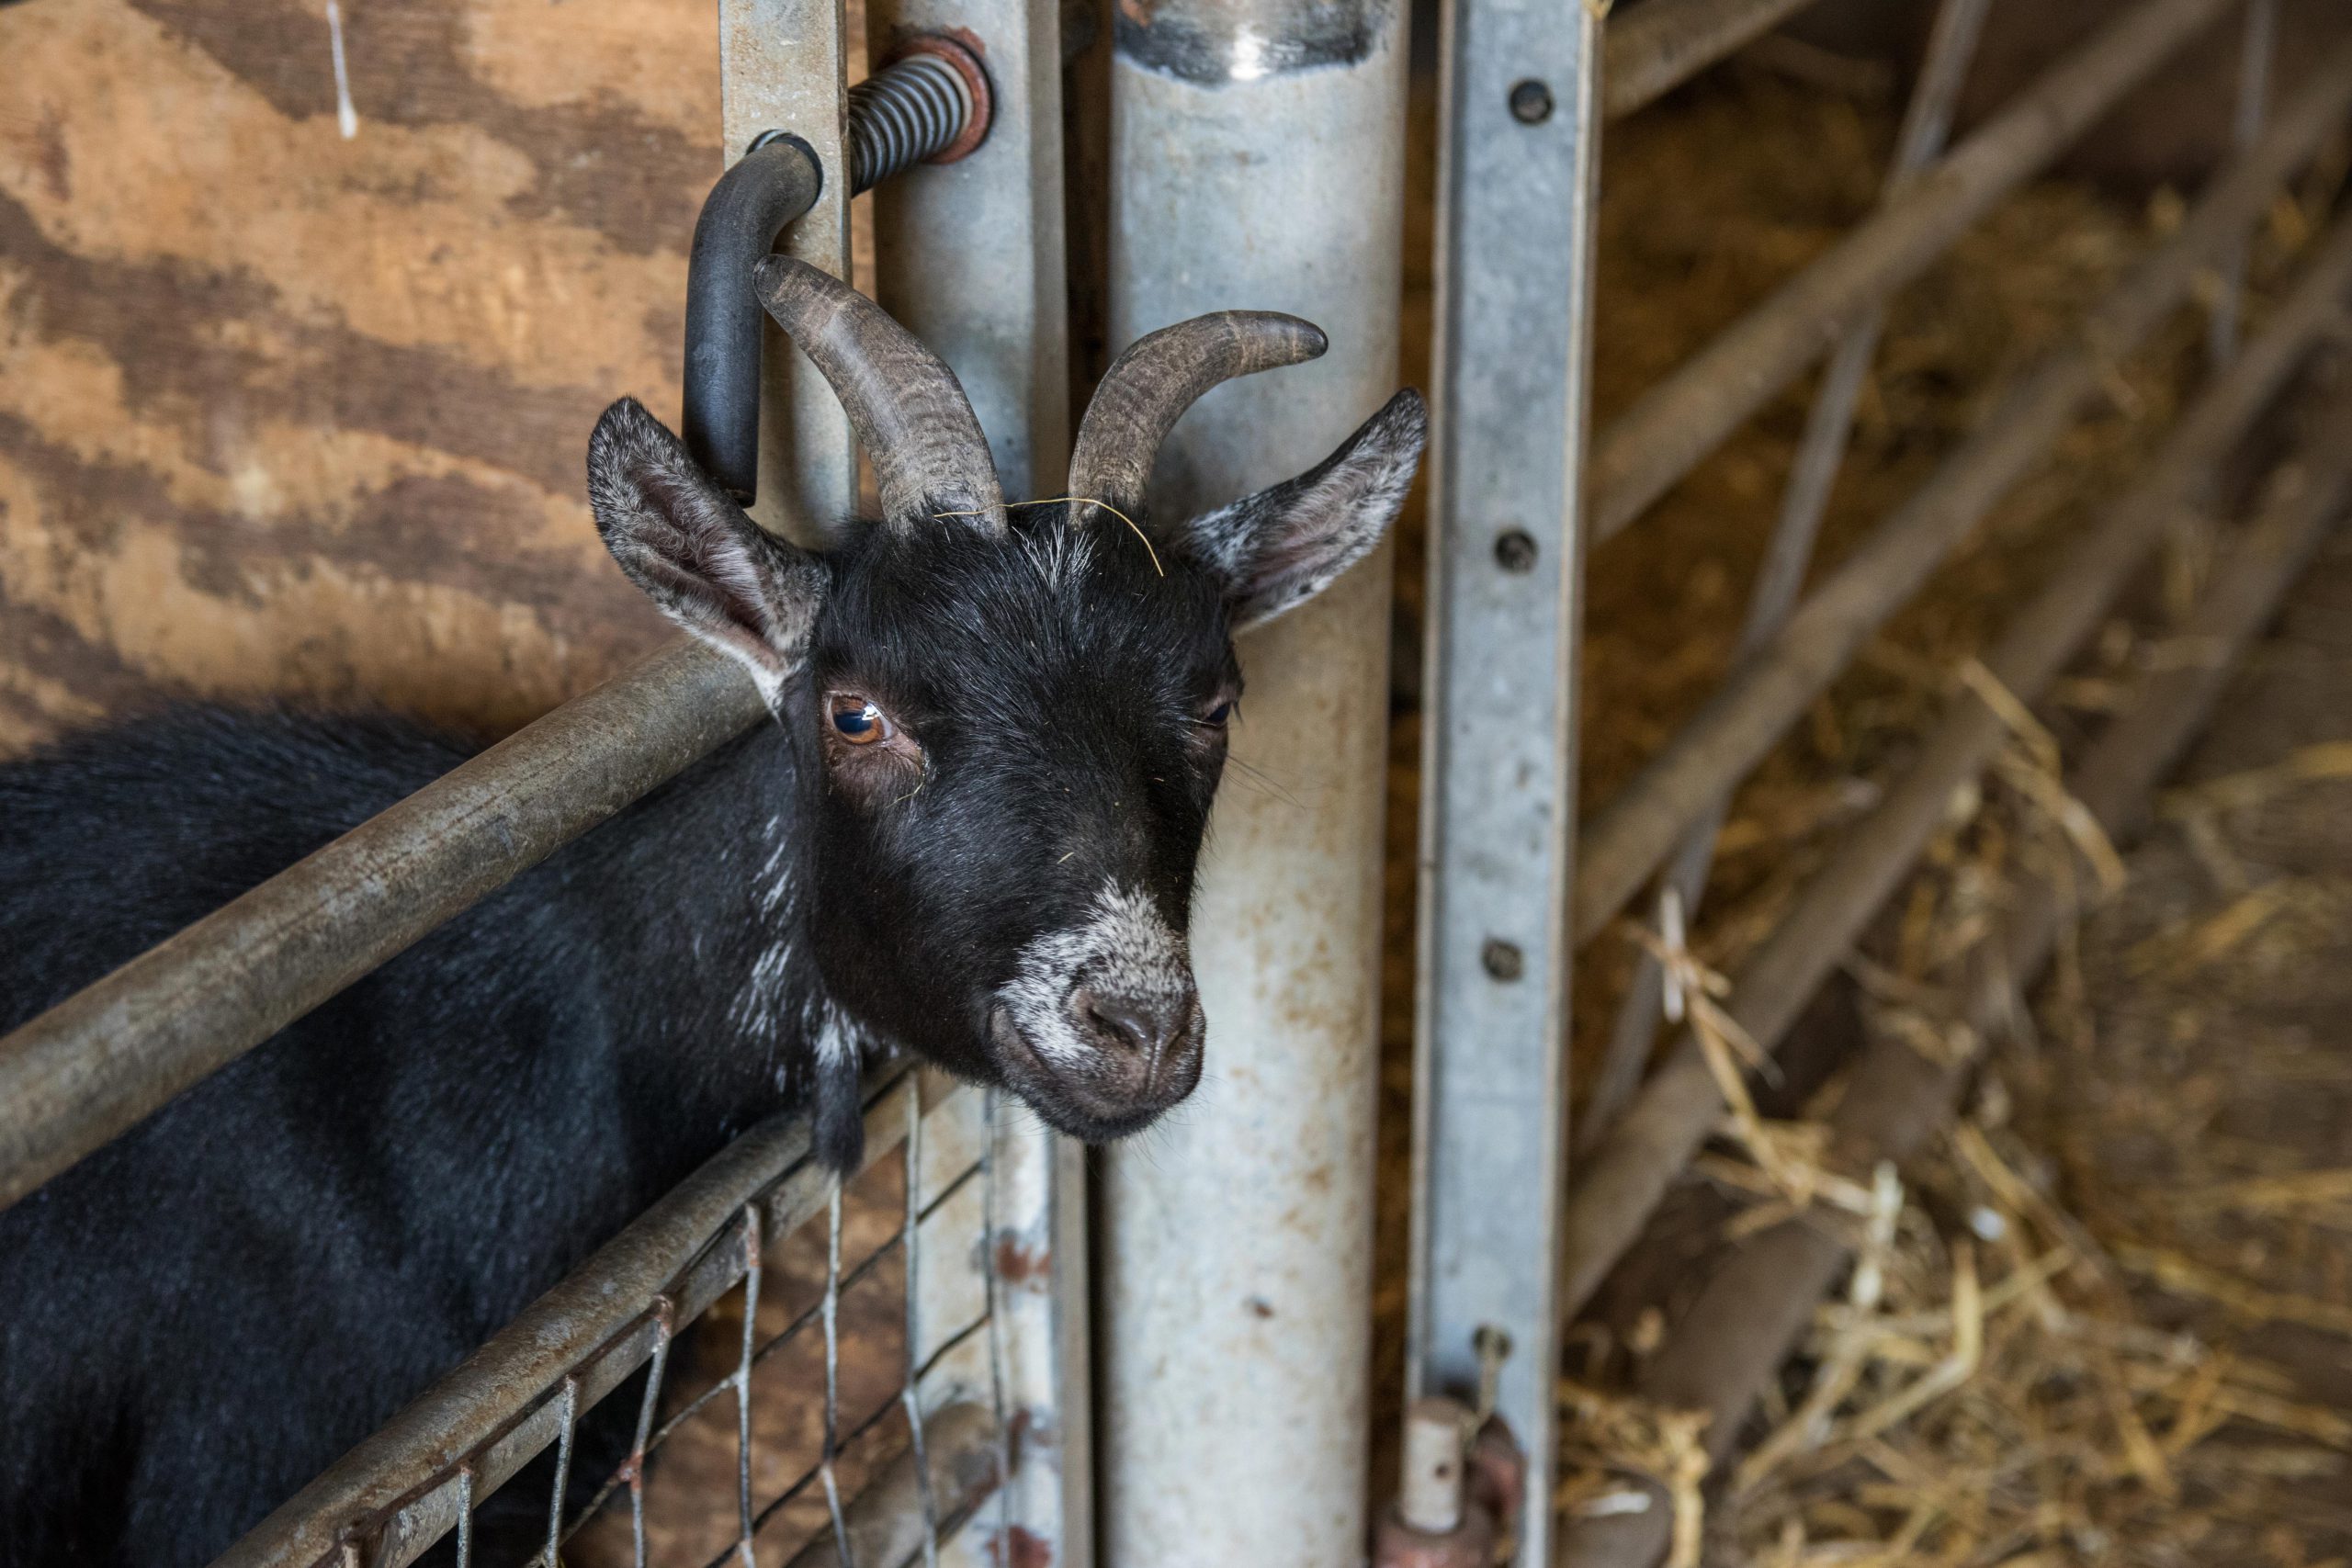 Goat through a fence